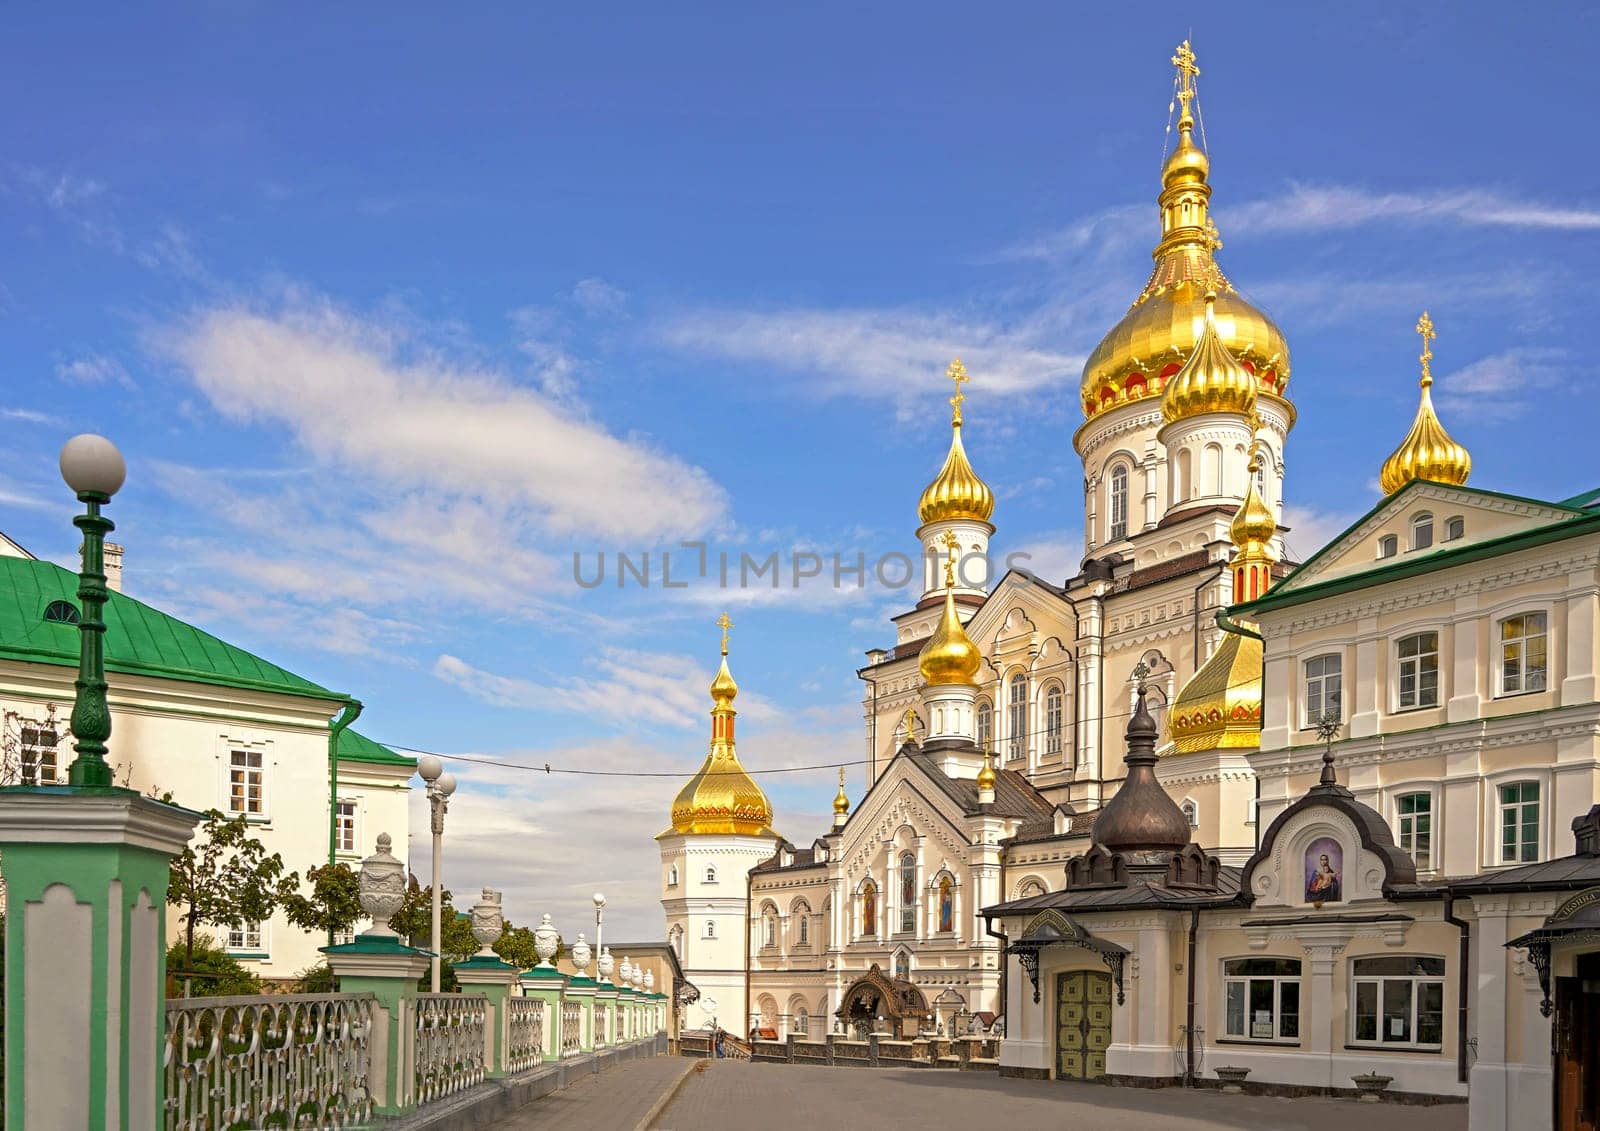 Holy Dormition Pochaev Lavra. Ukraine. Christian Orthodox architectural complex and monastery